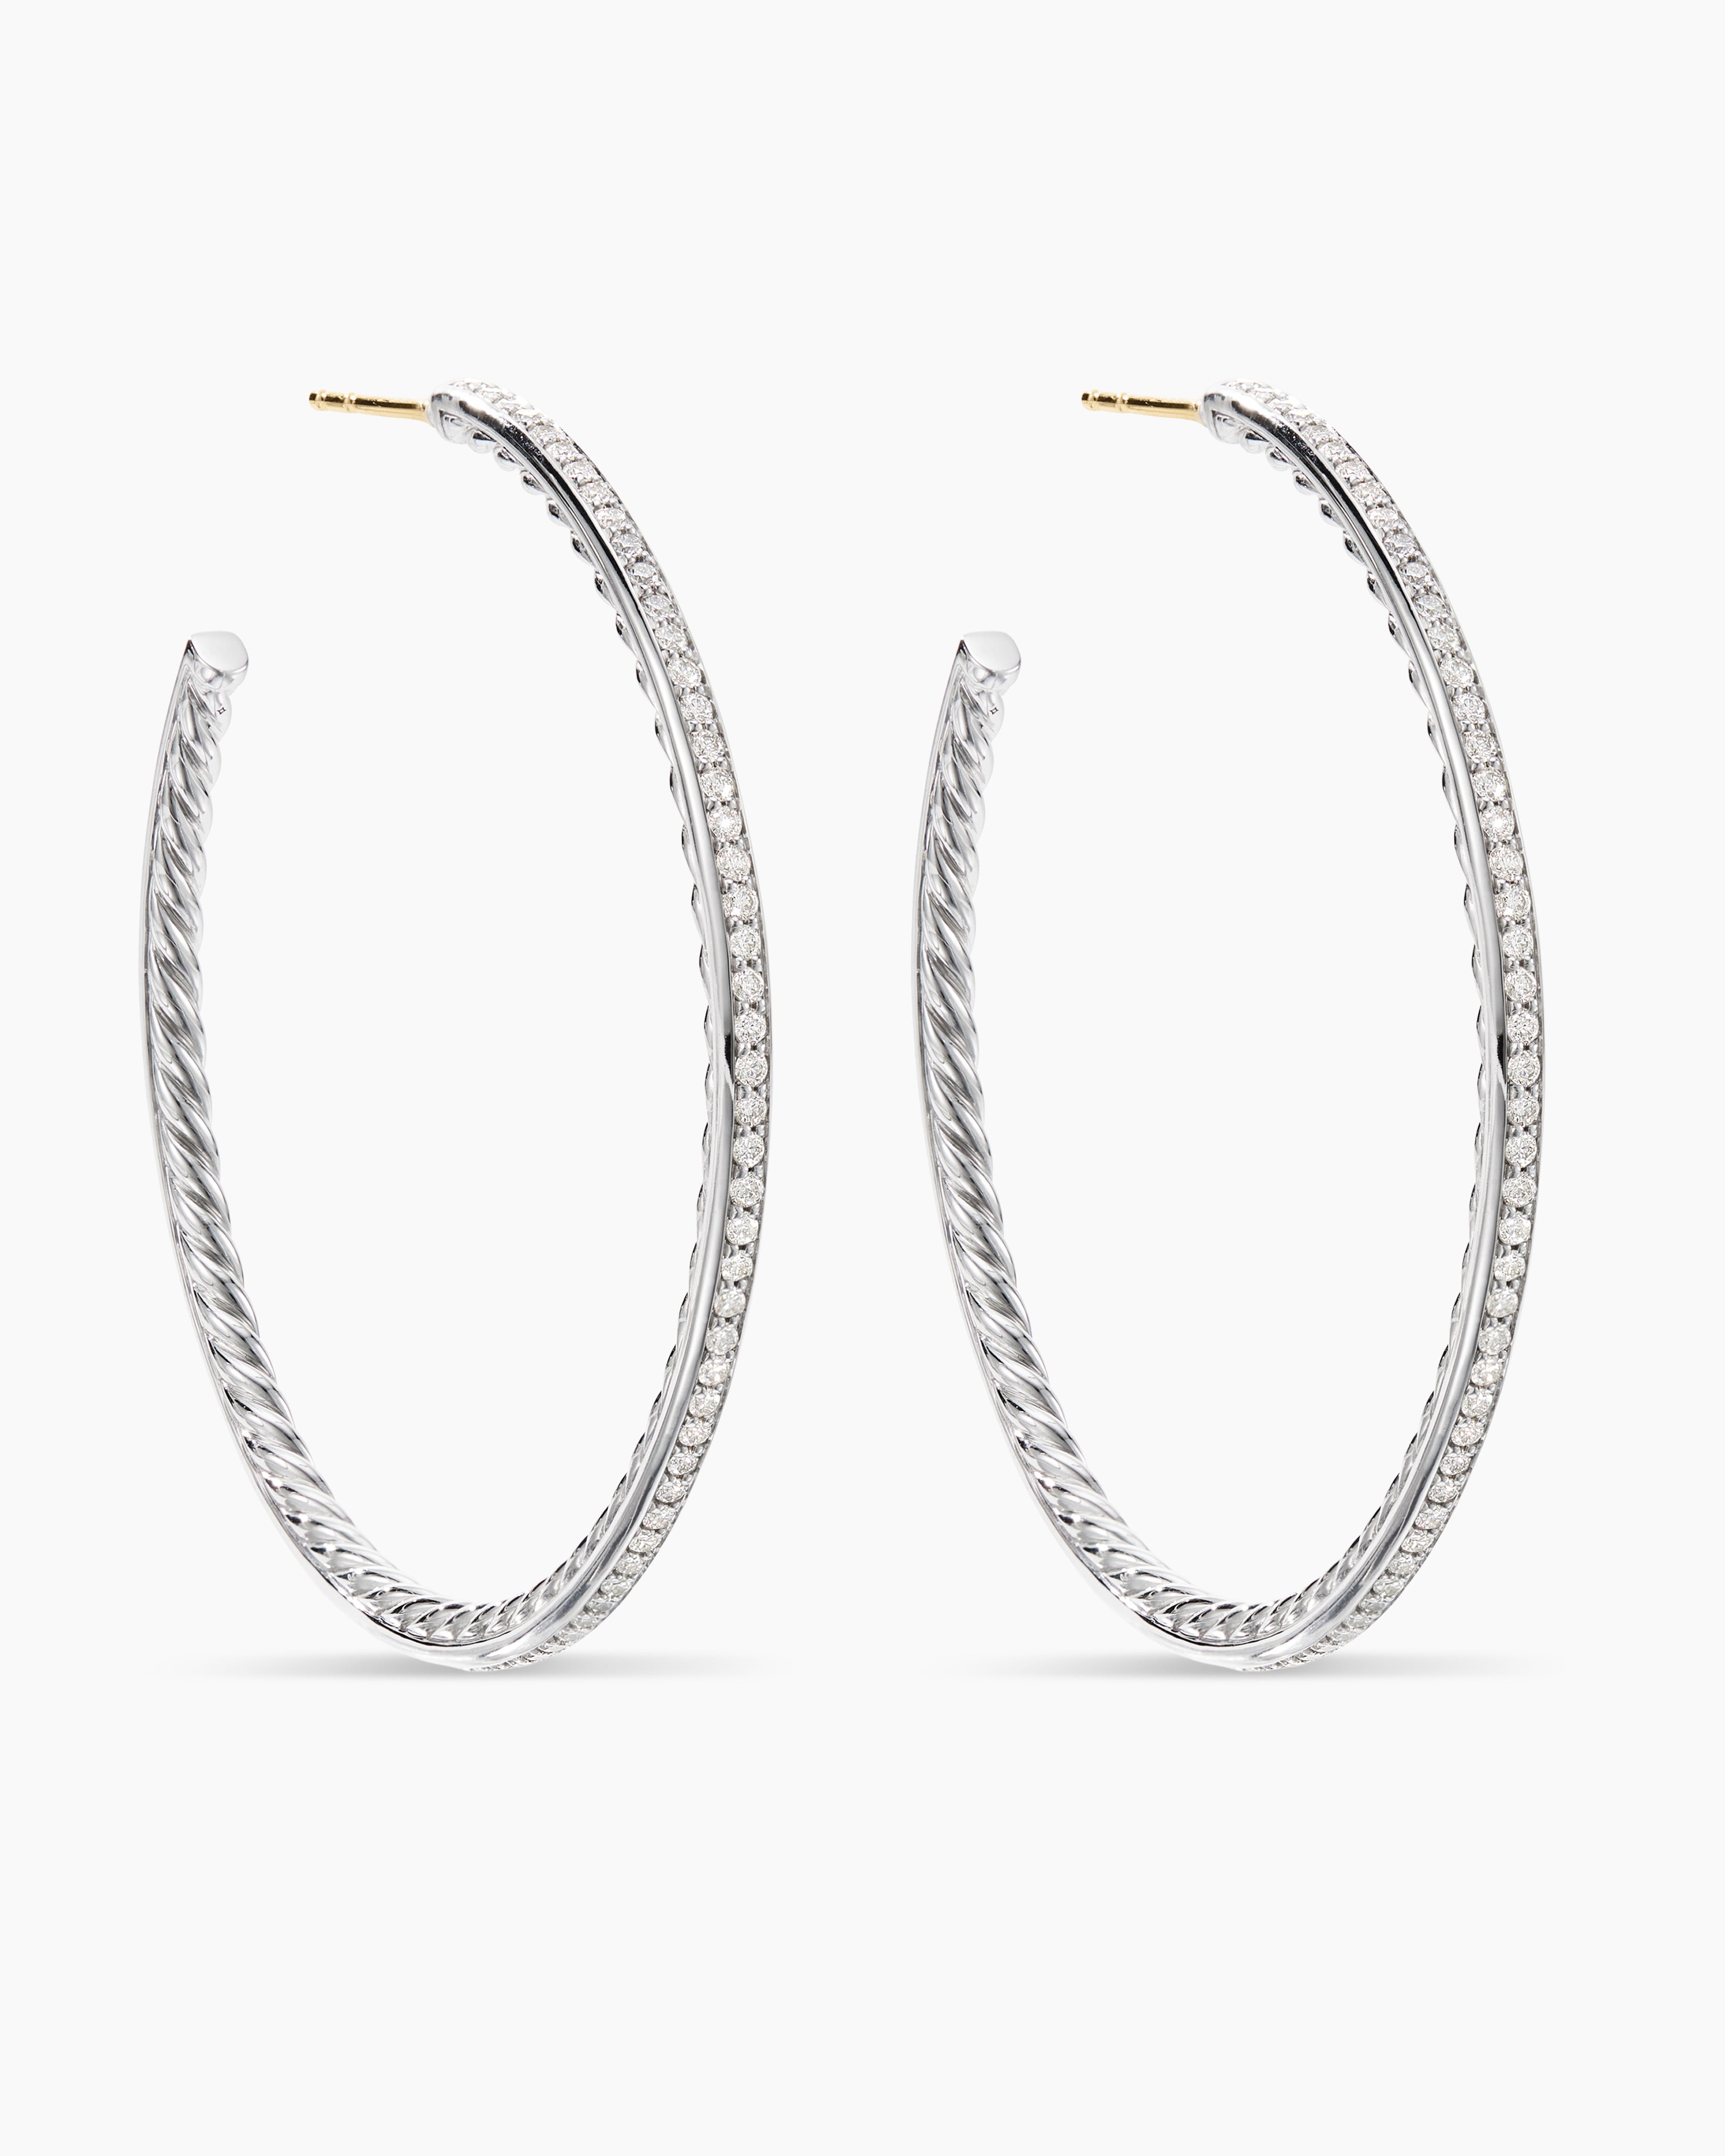 SKN Jewellery Special Silver Polish Big Round Alloy Hoop Ear Bali Earrings  for Women (Silver,7cm) : Amazon.in: Fashion